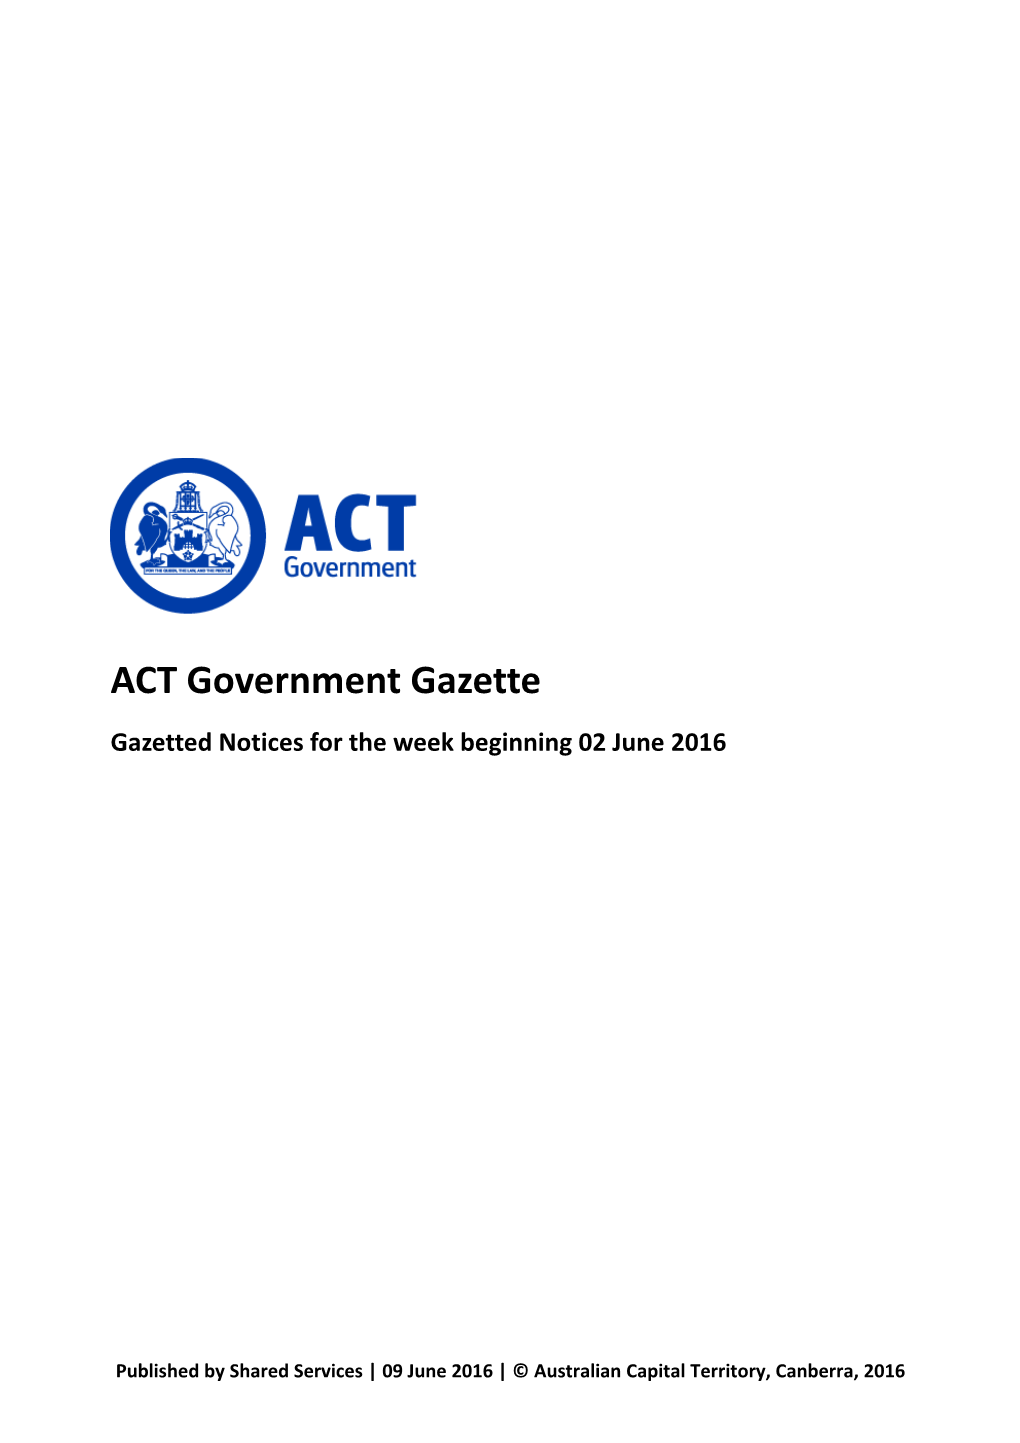 ACT Government Gazette 9 Jun 2016